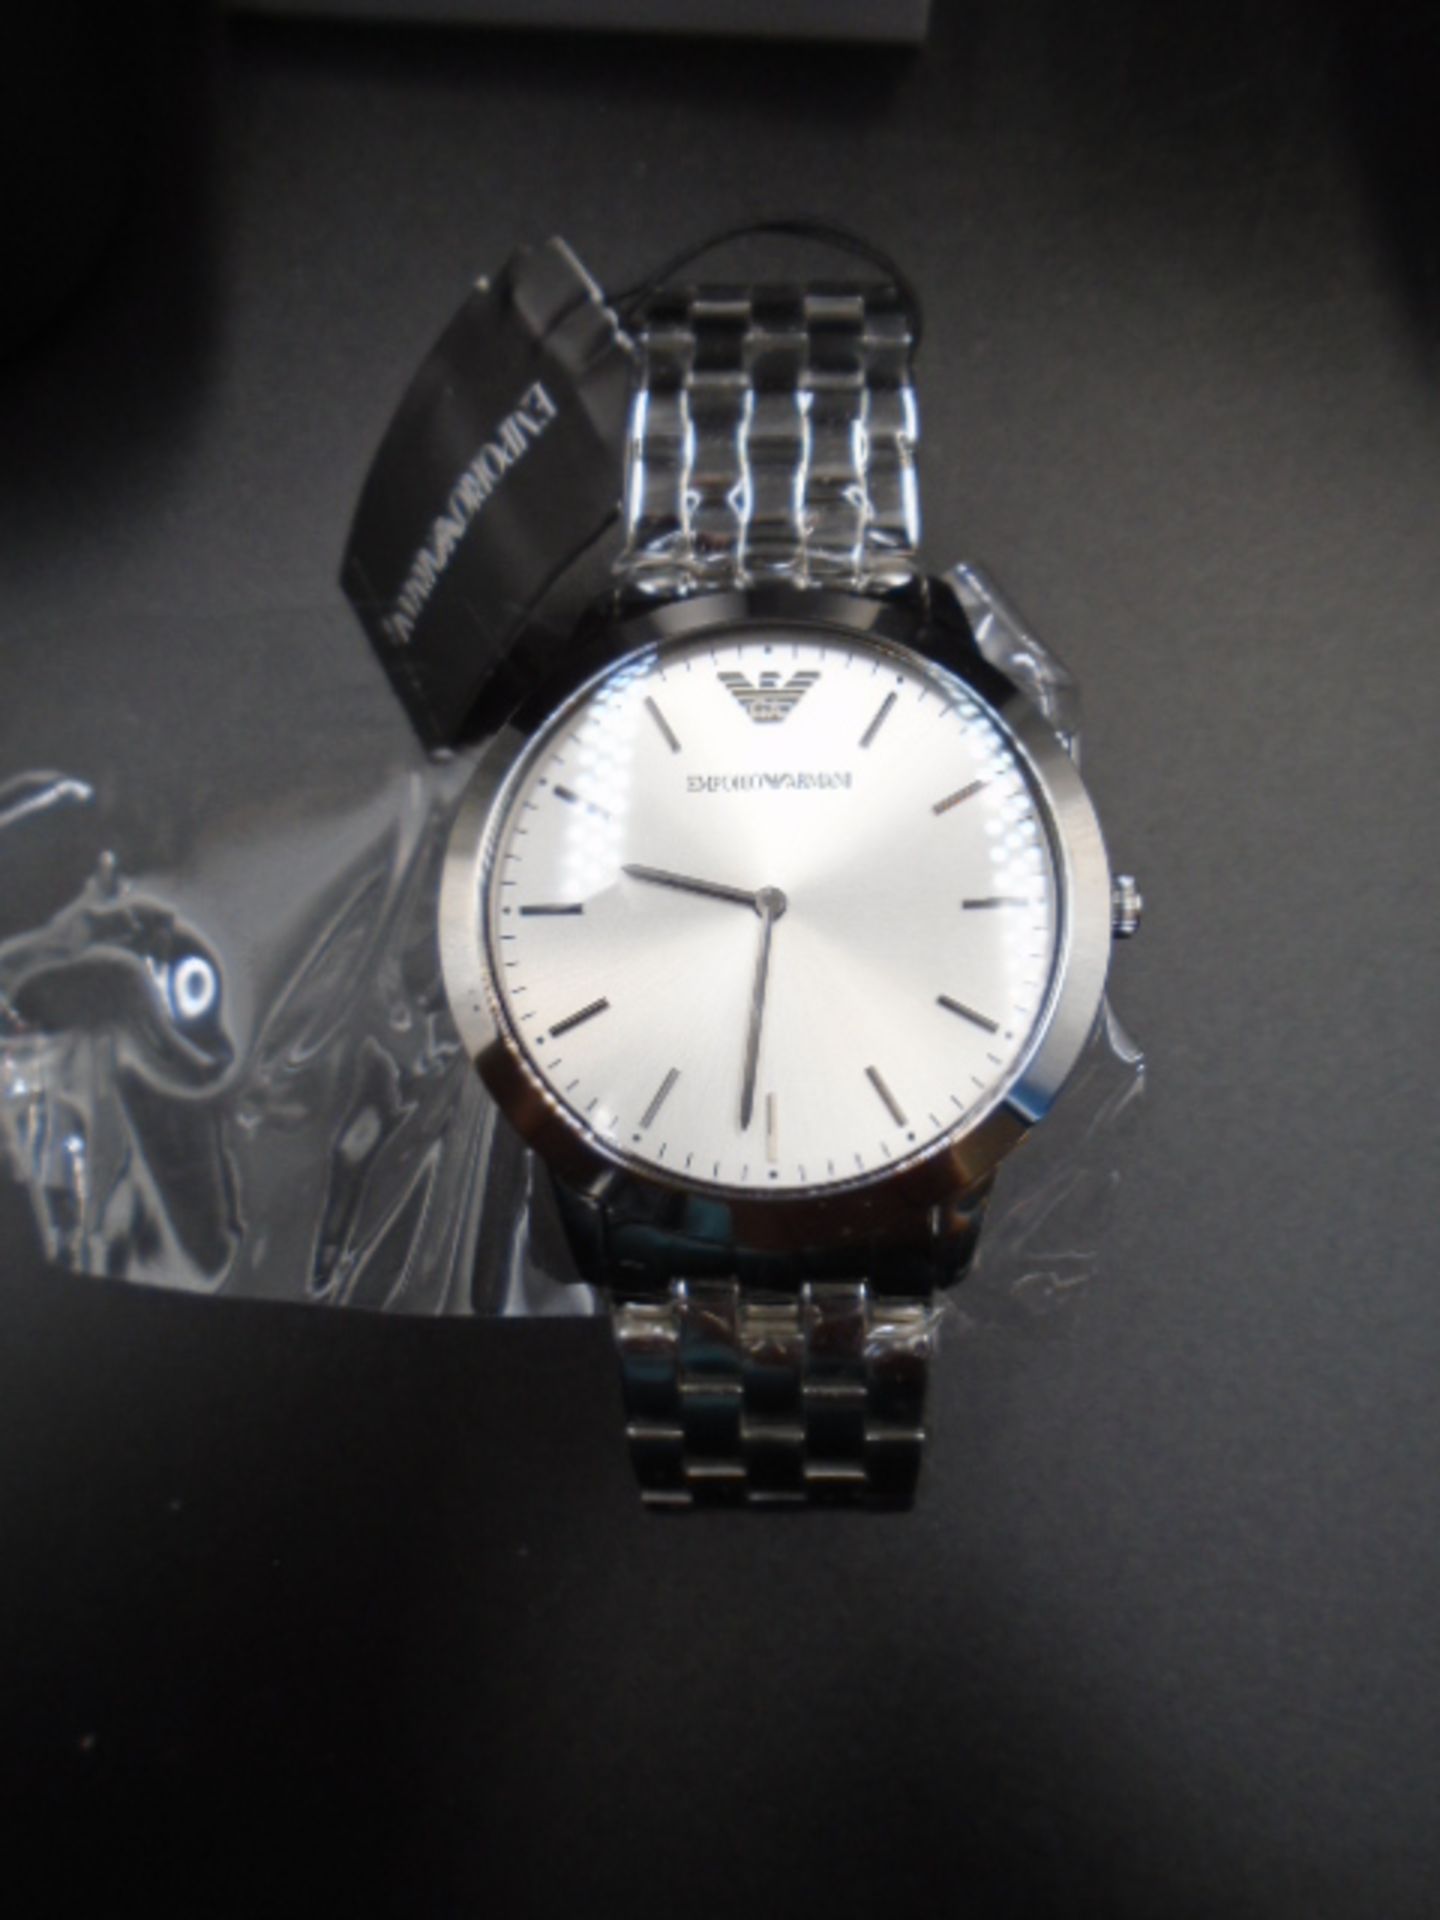 2 Emporio Armani watches - mens dino slim steel bracelet model AR 1745 and ladies quartz watch - Image 9 of 11